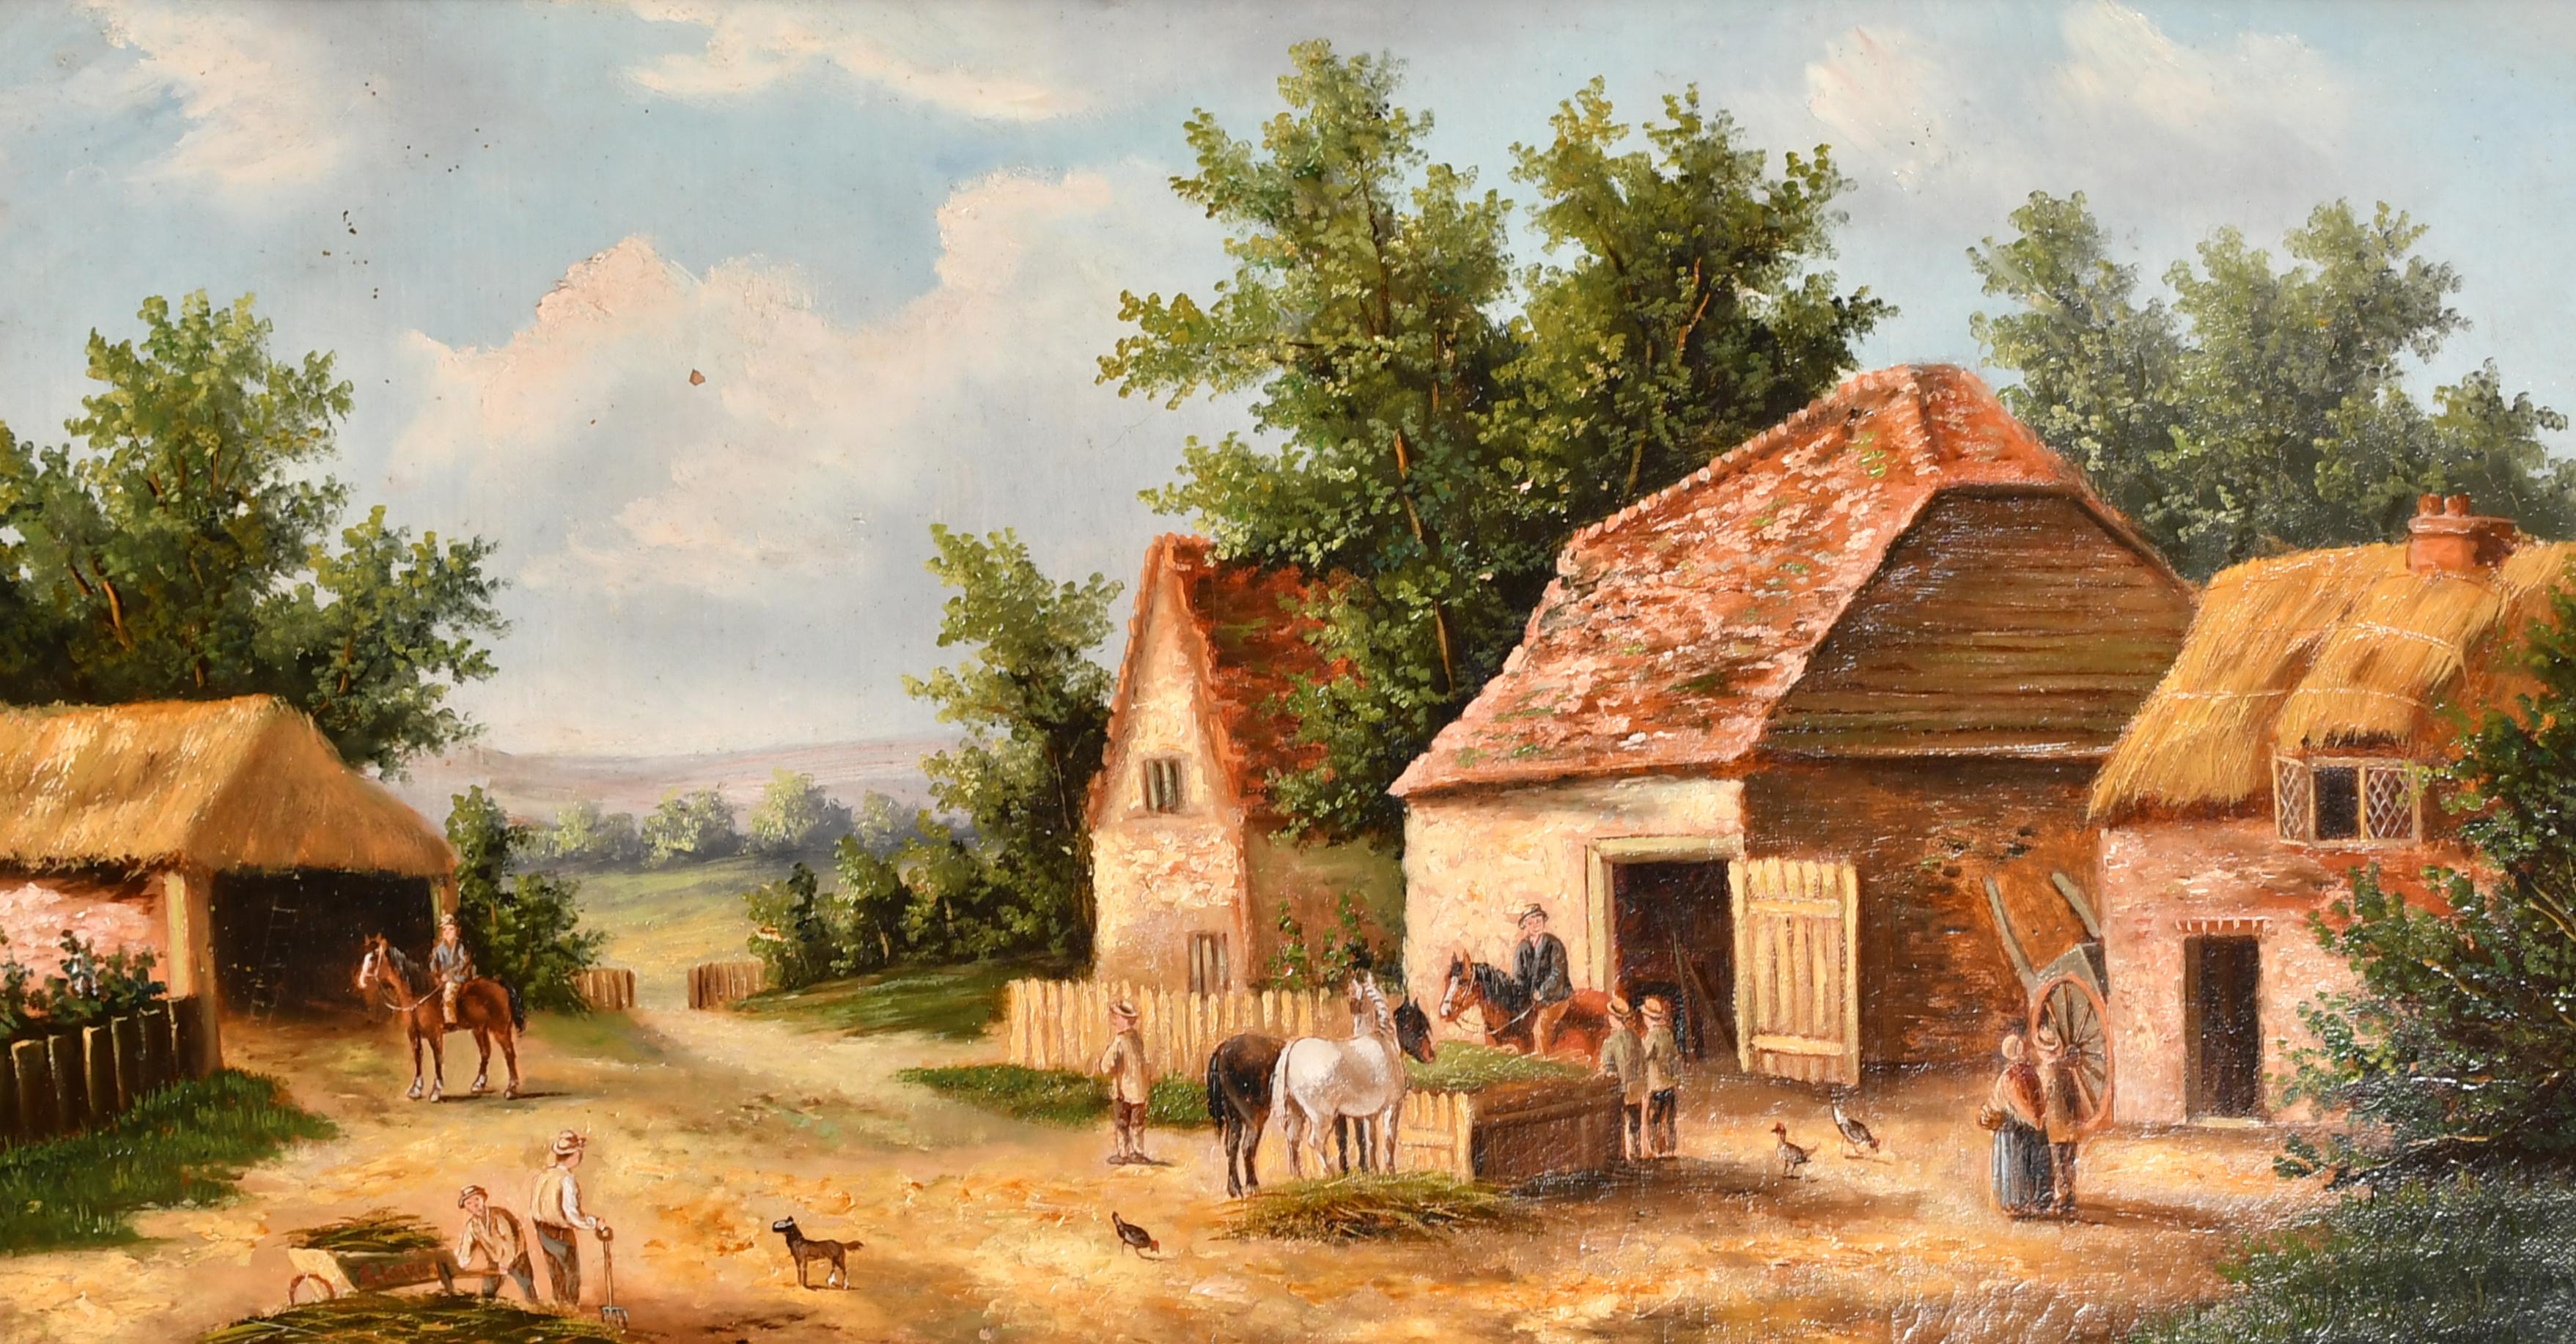 Georgina LARA Peinture à l'huile du 19e siècle paysage scène de ferme - Painting de Georgina Lara